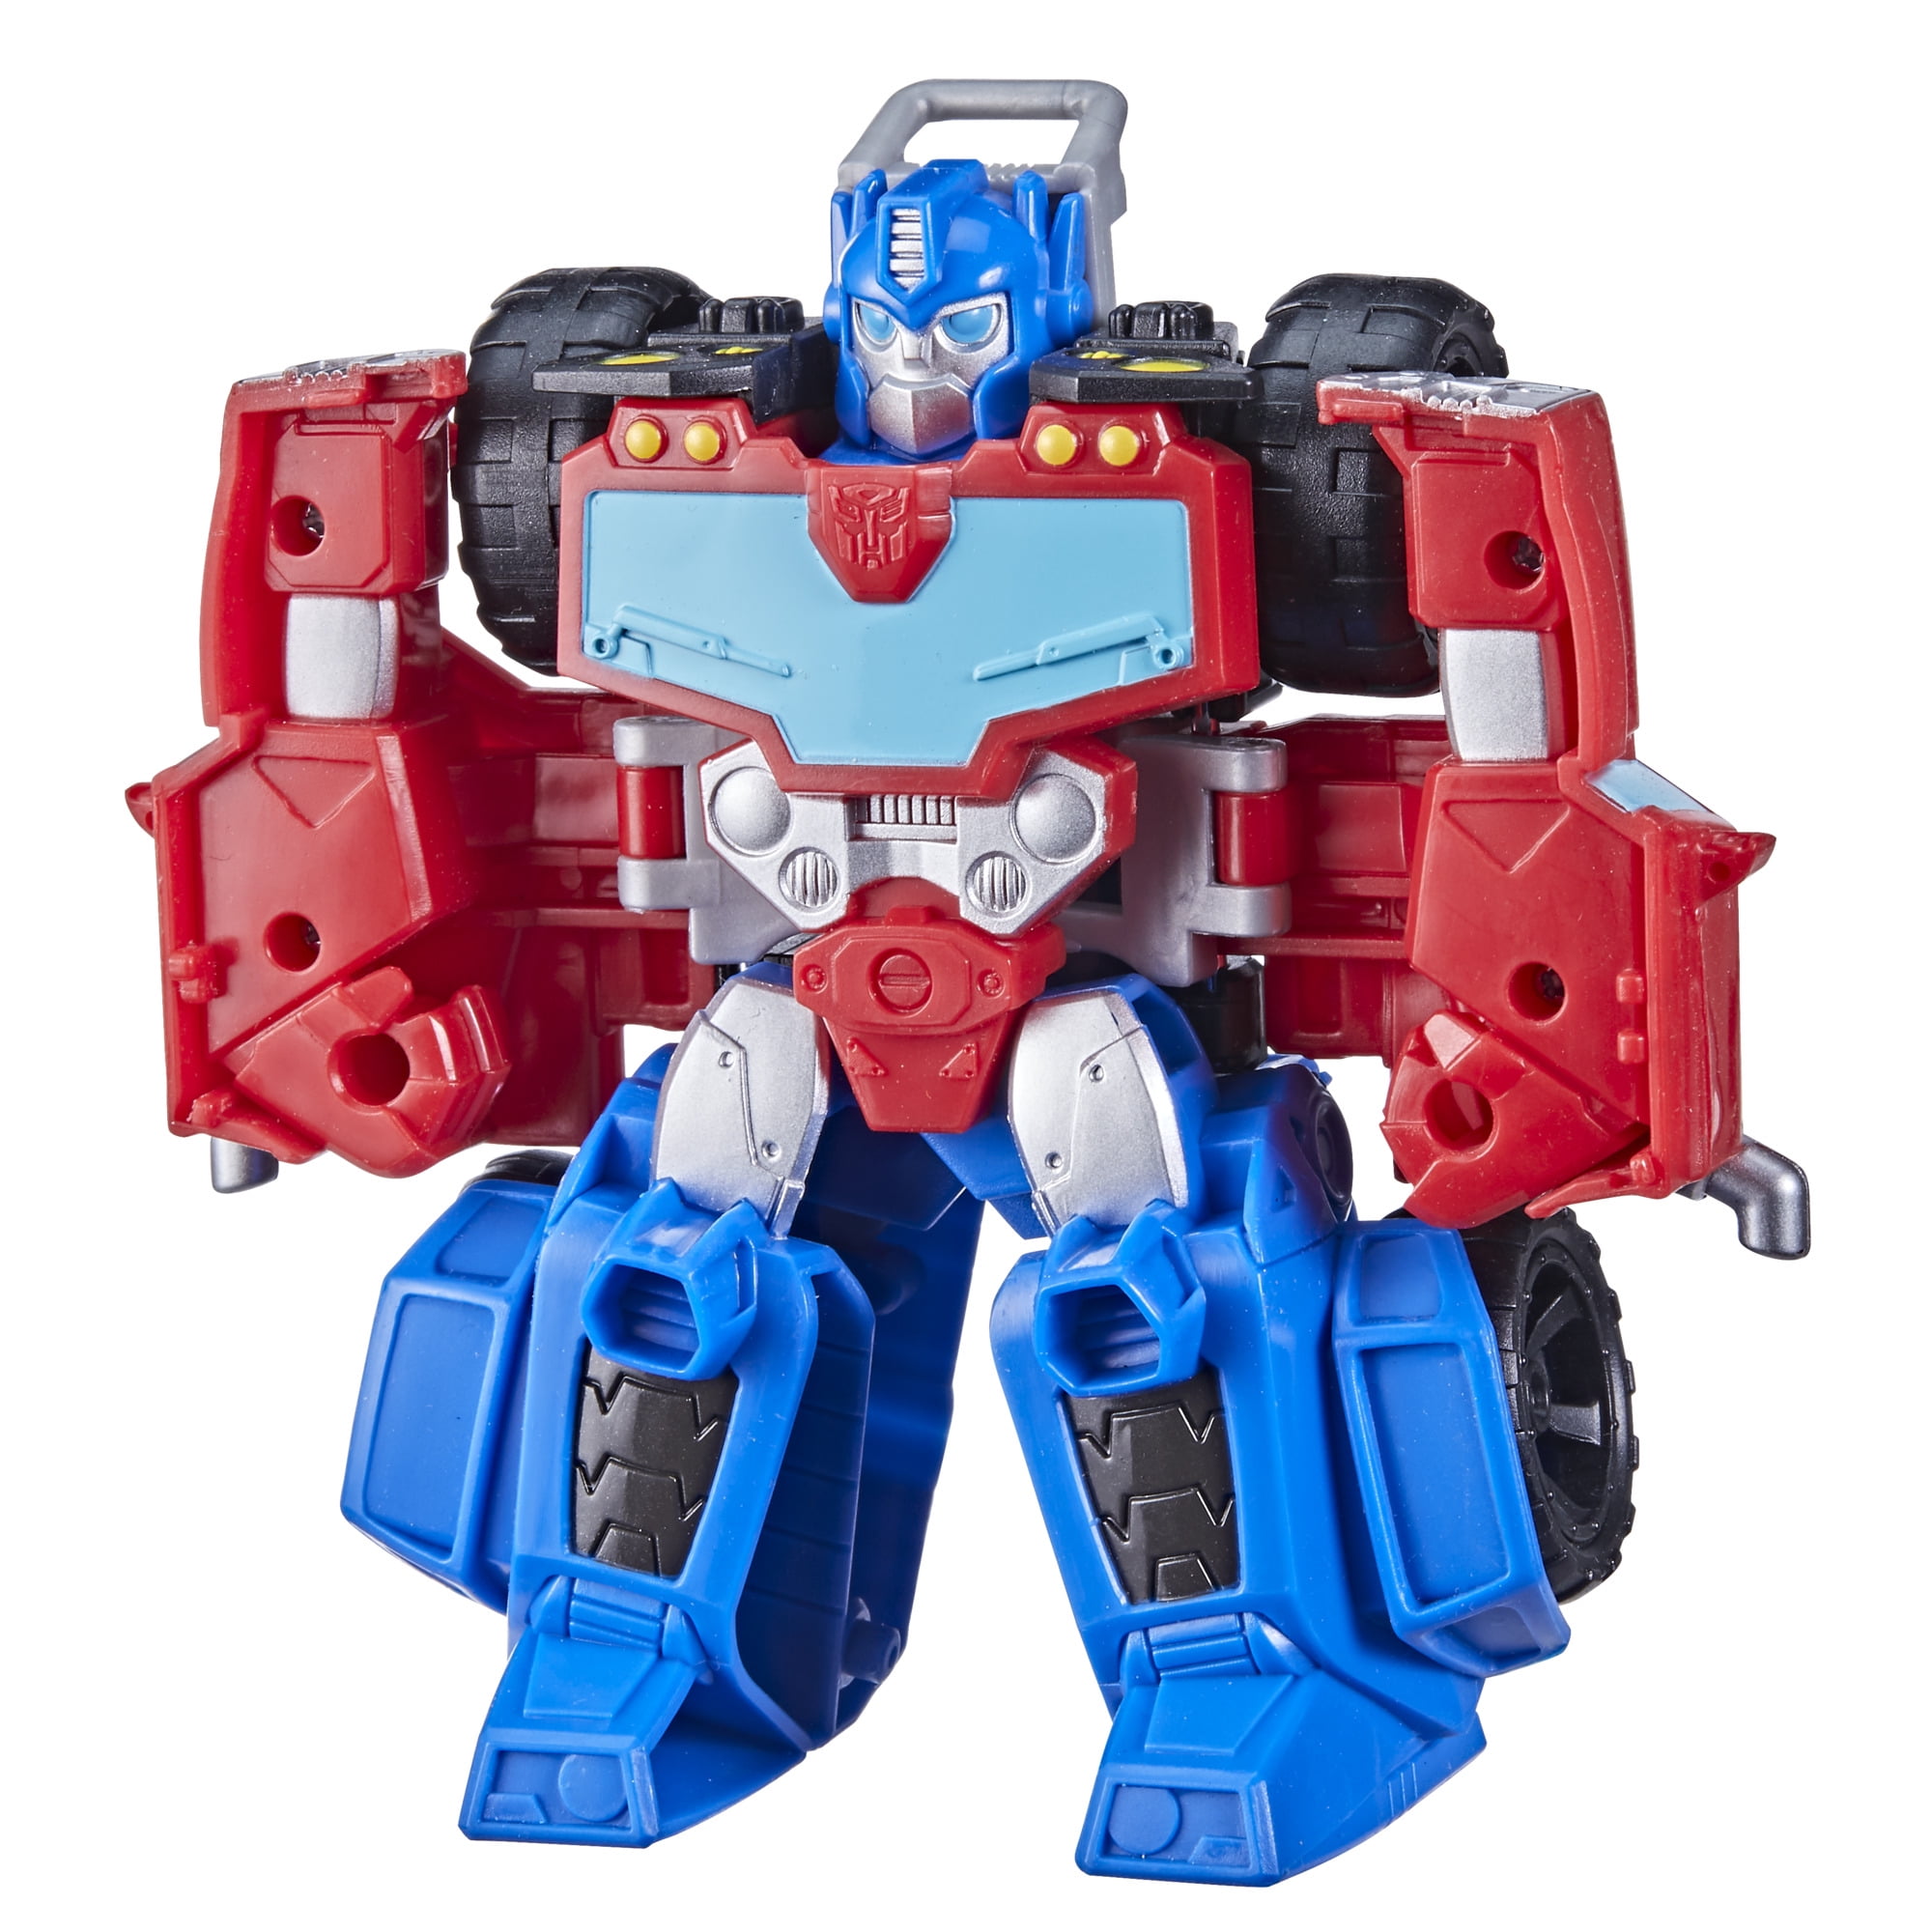 Playskool Heroes Transformers Rescue Bots Optimus Prime Plow Truck Mode 